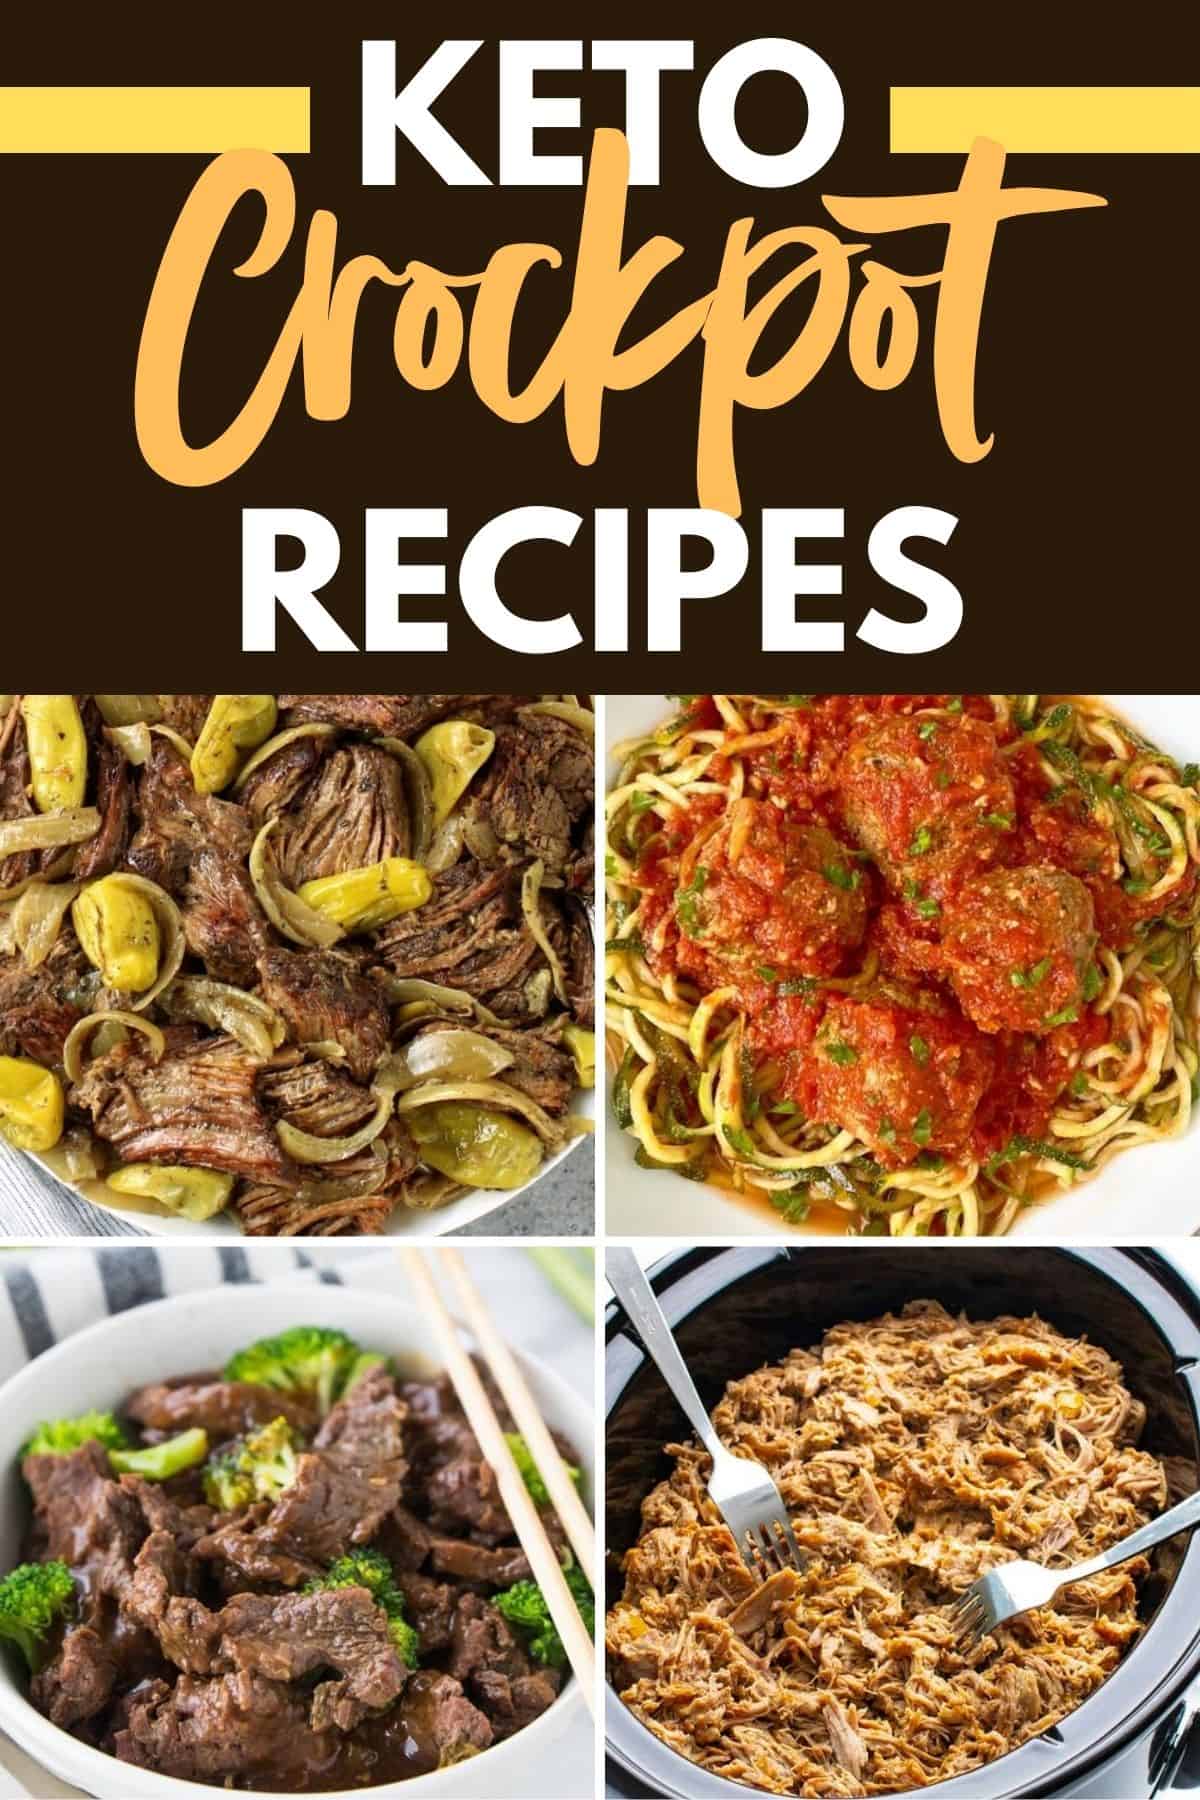 Best Keto Crockpot Recipes